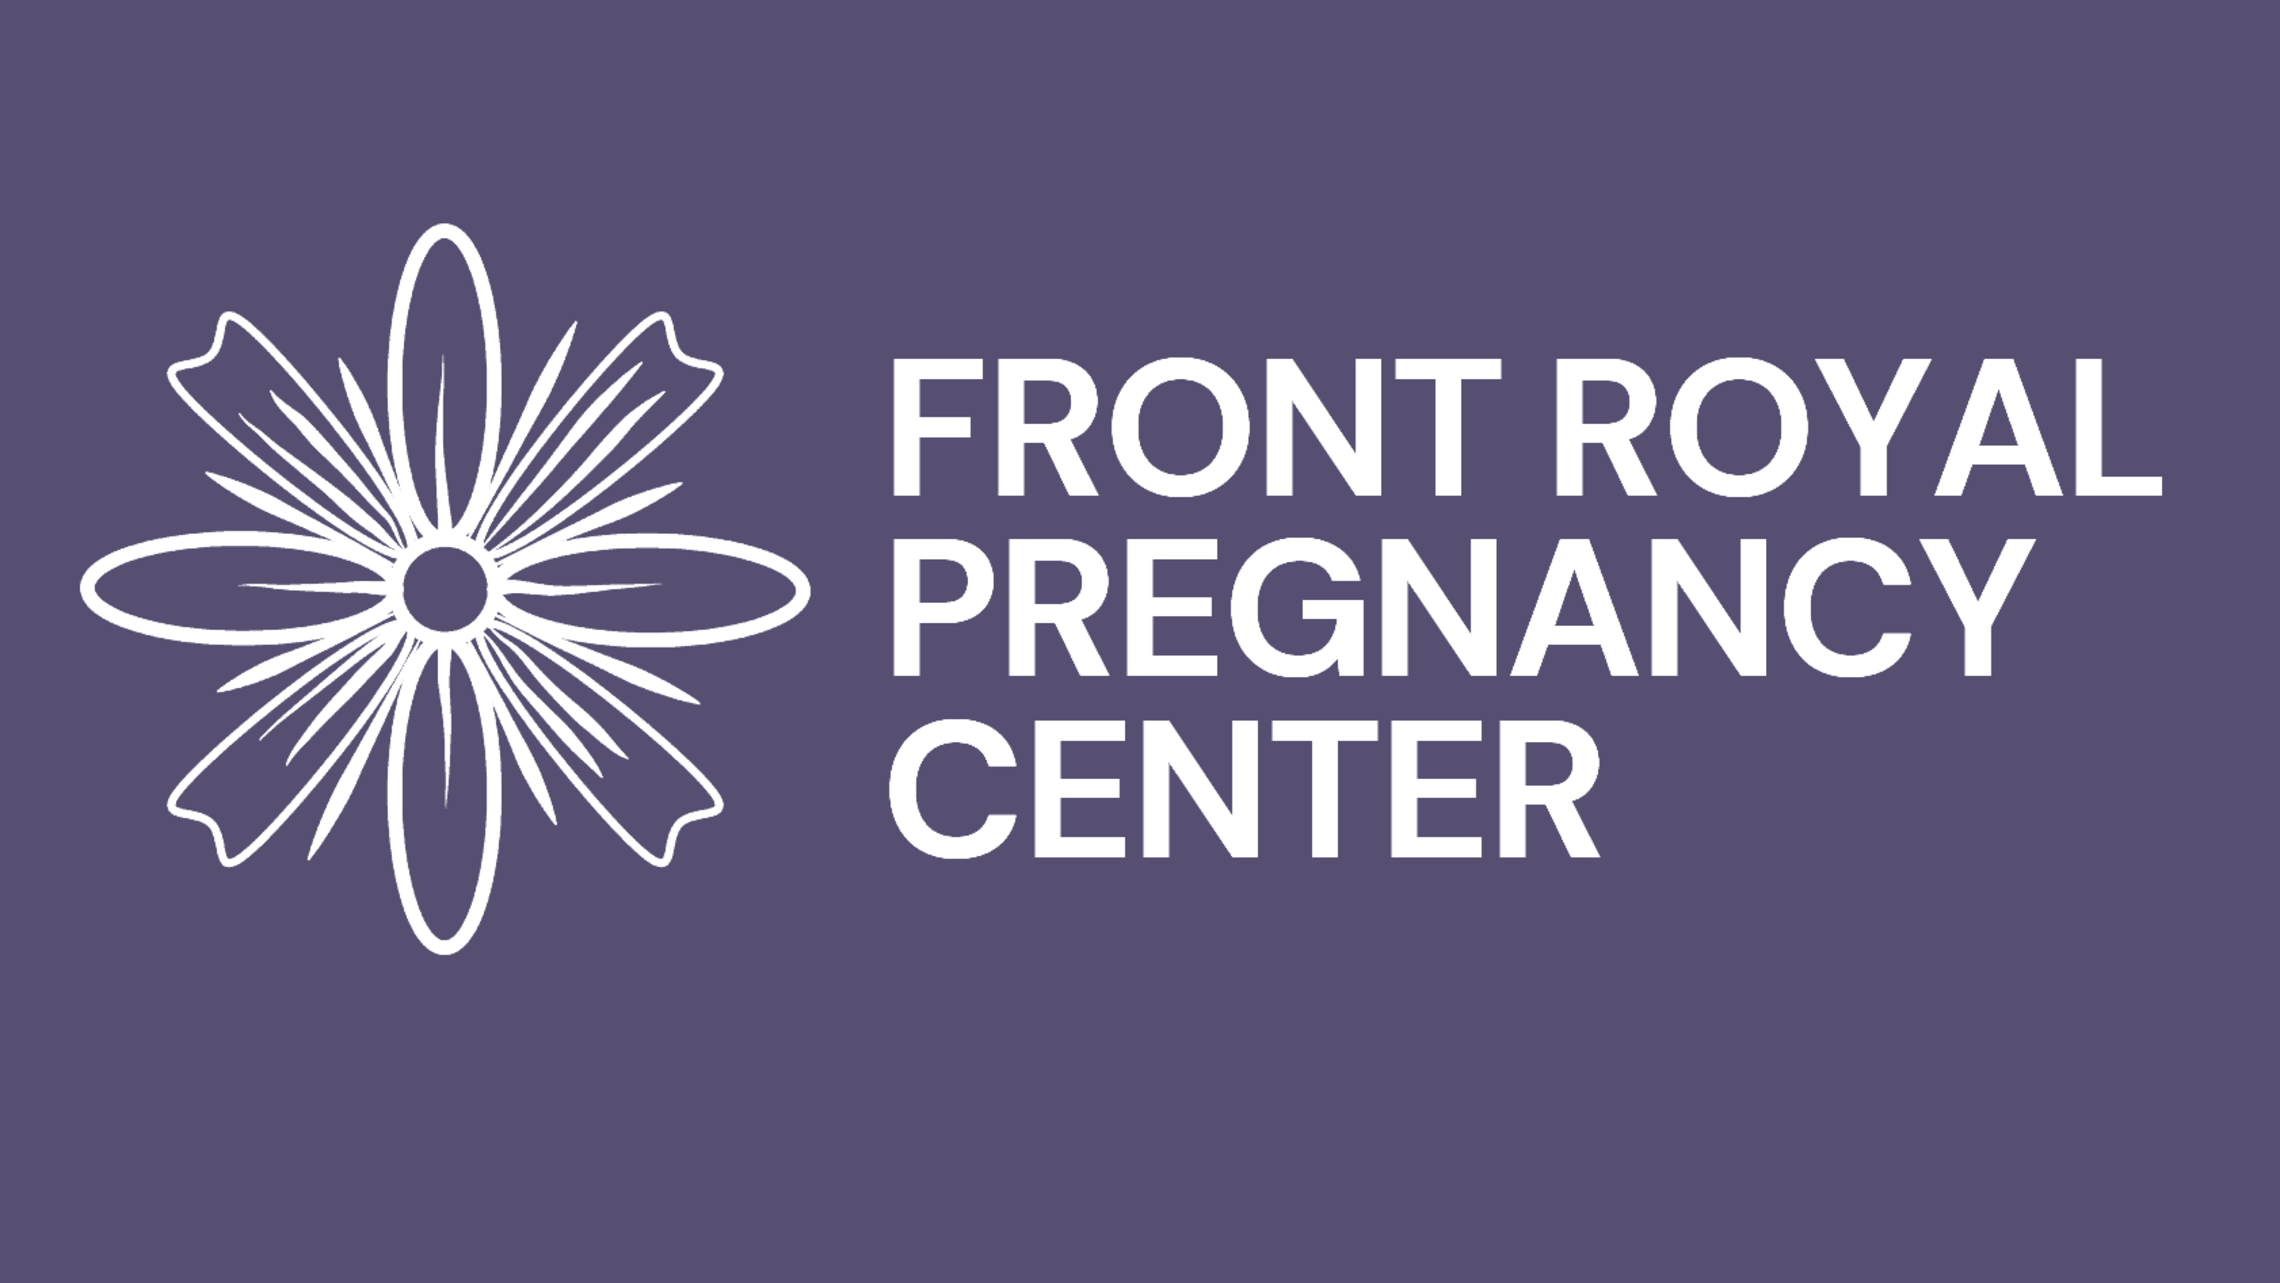 Frontroyalpregnancycenter